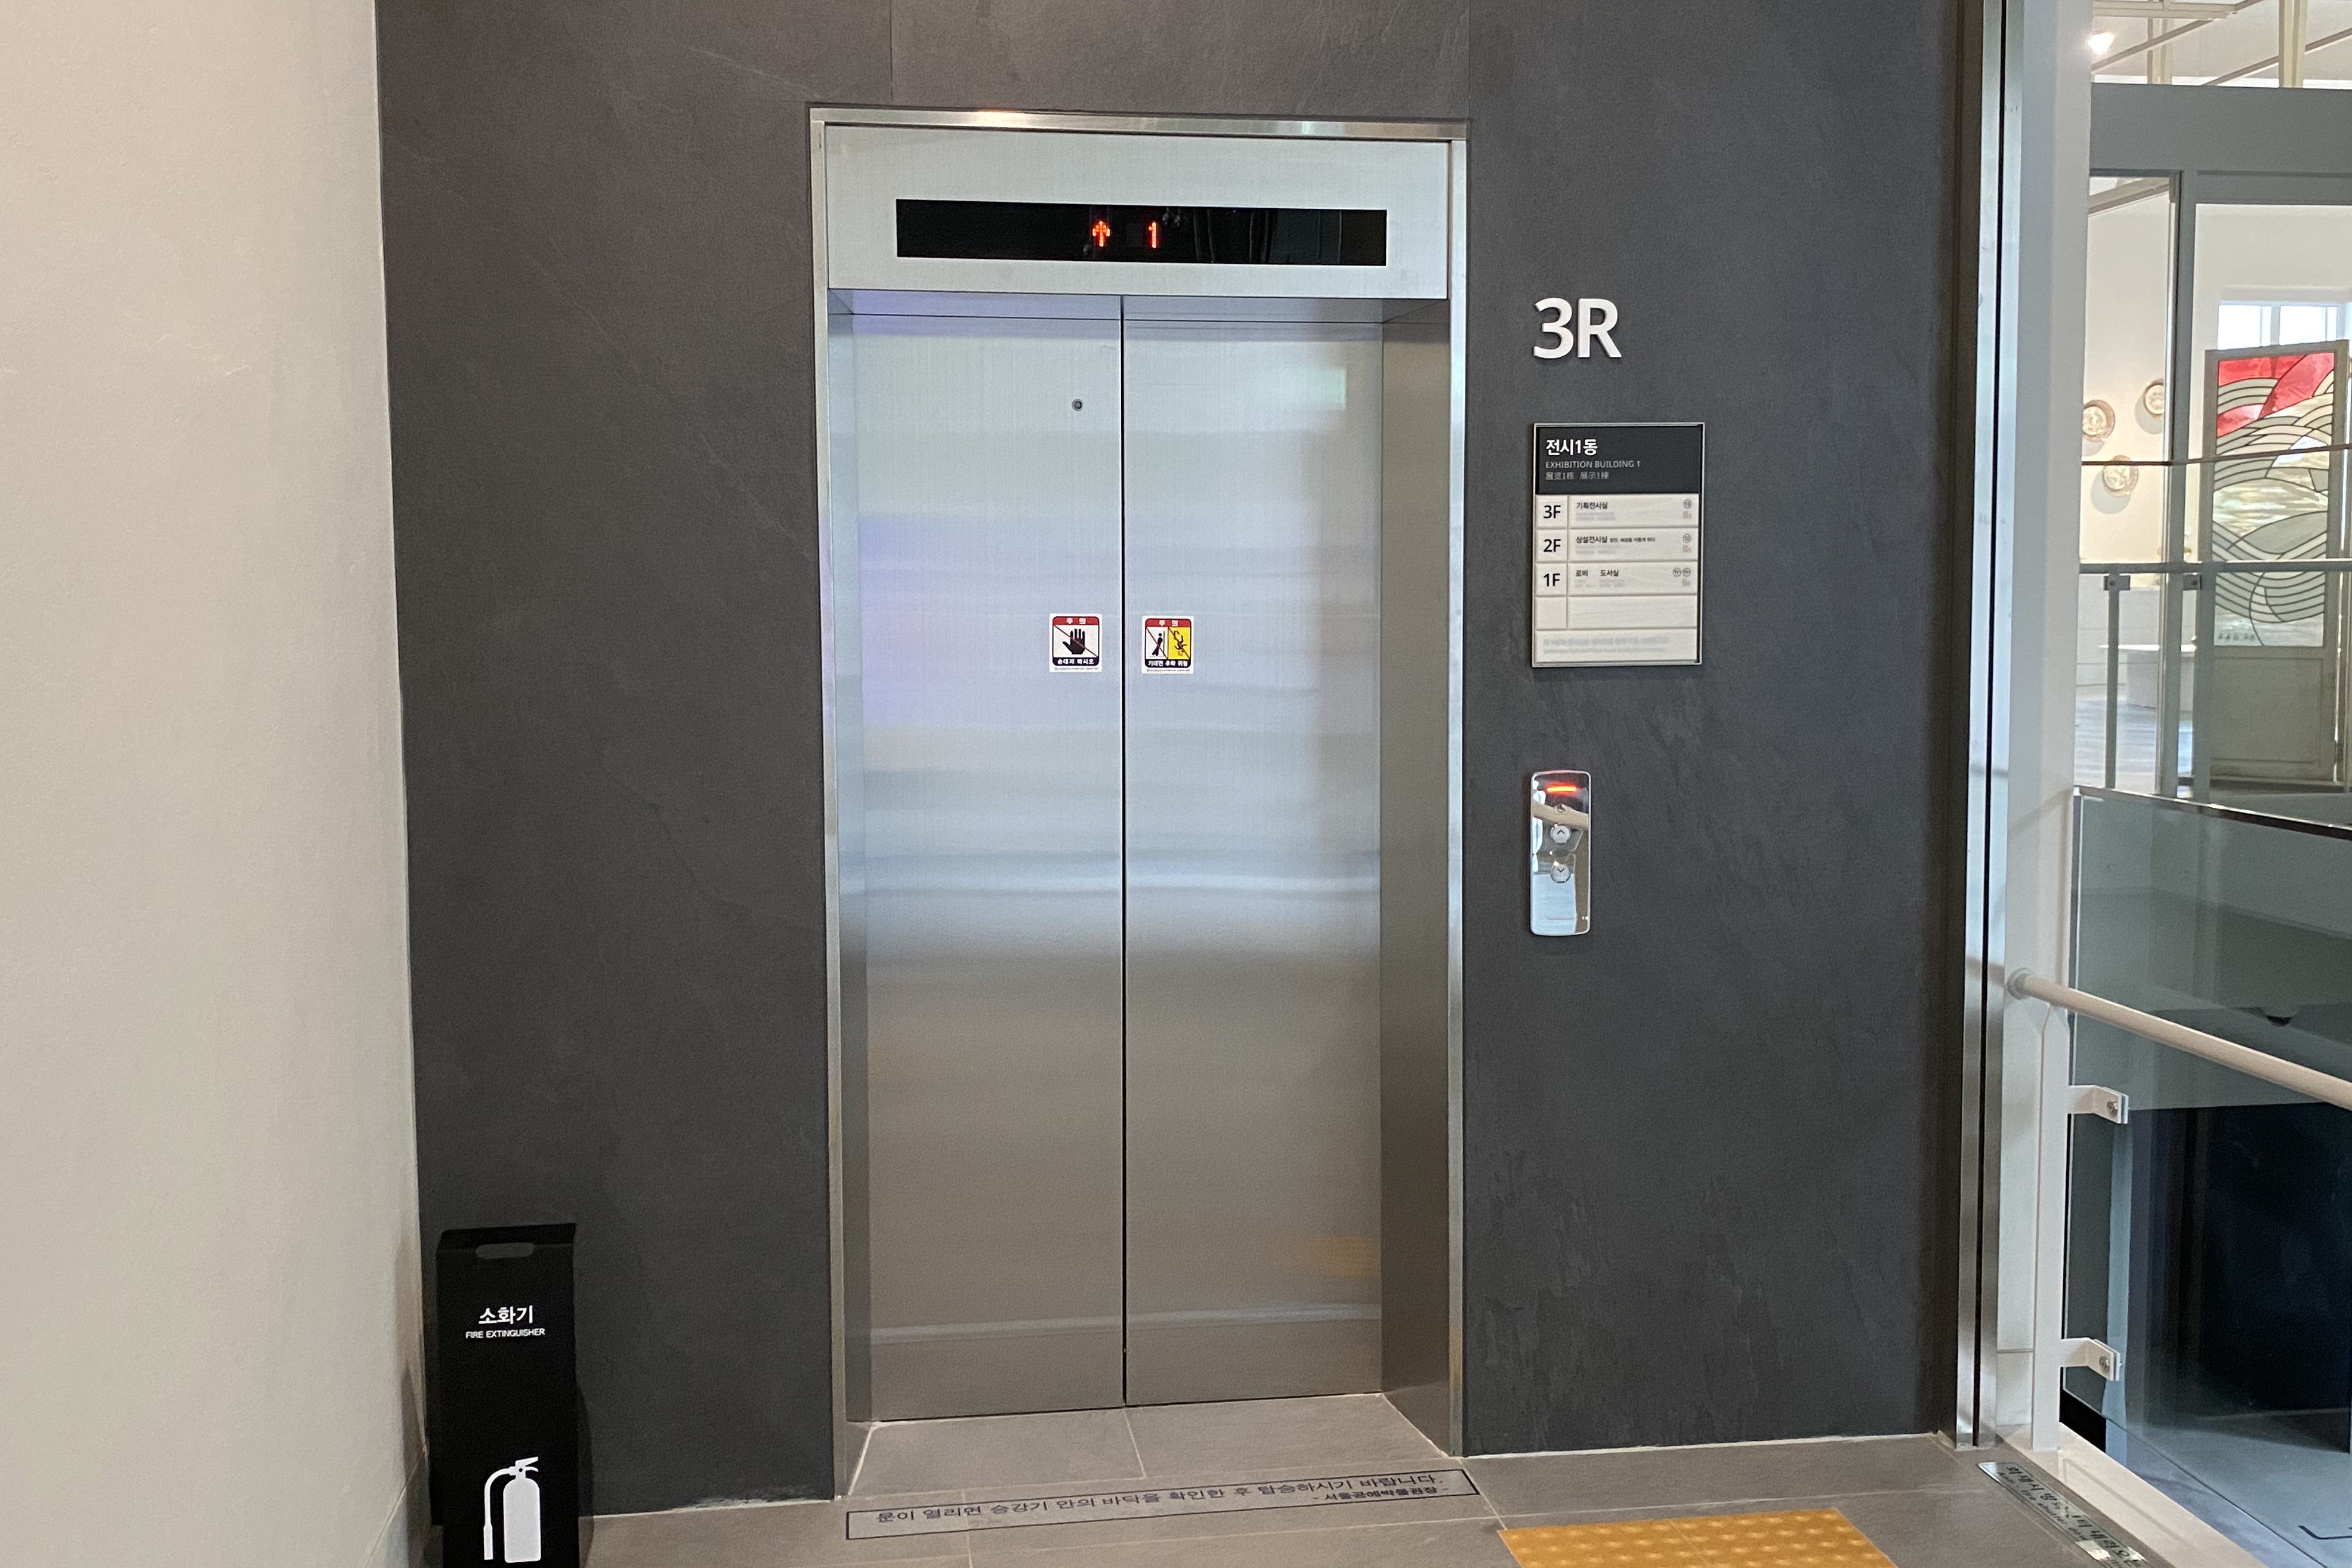 Elevator0 : Elevator with closed doors
